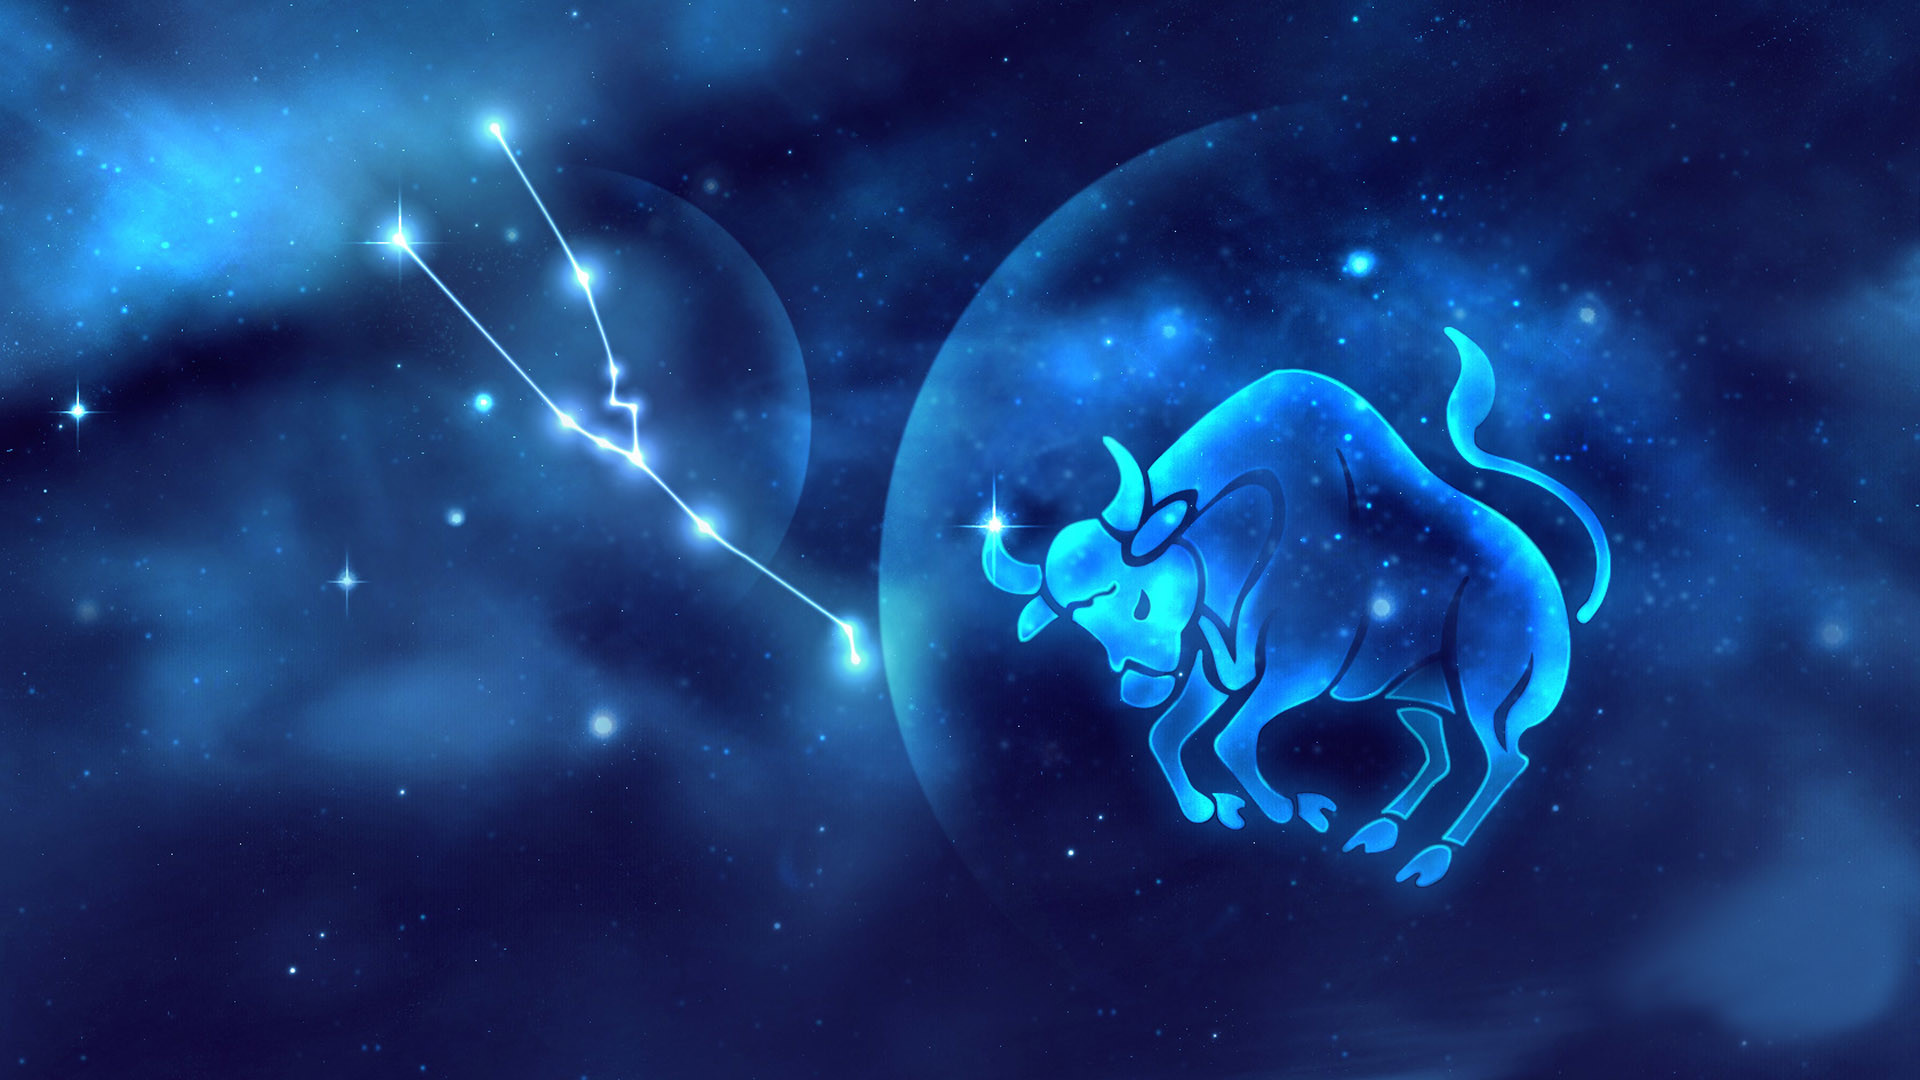 Co je značka Taurus Moon?